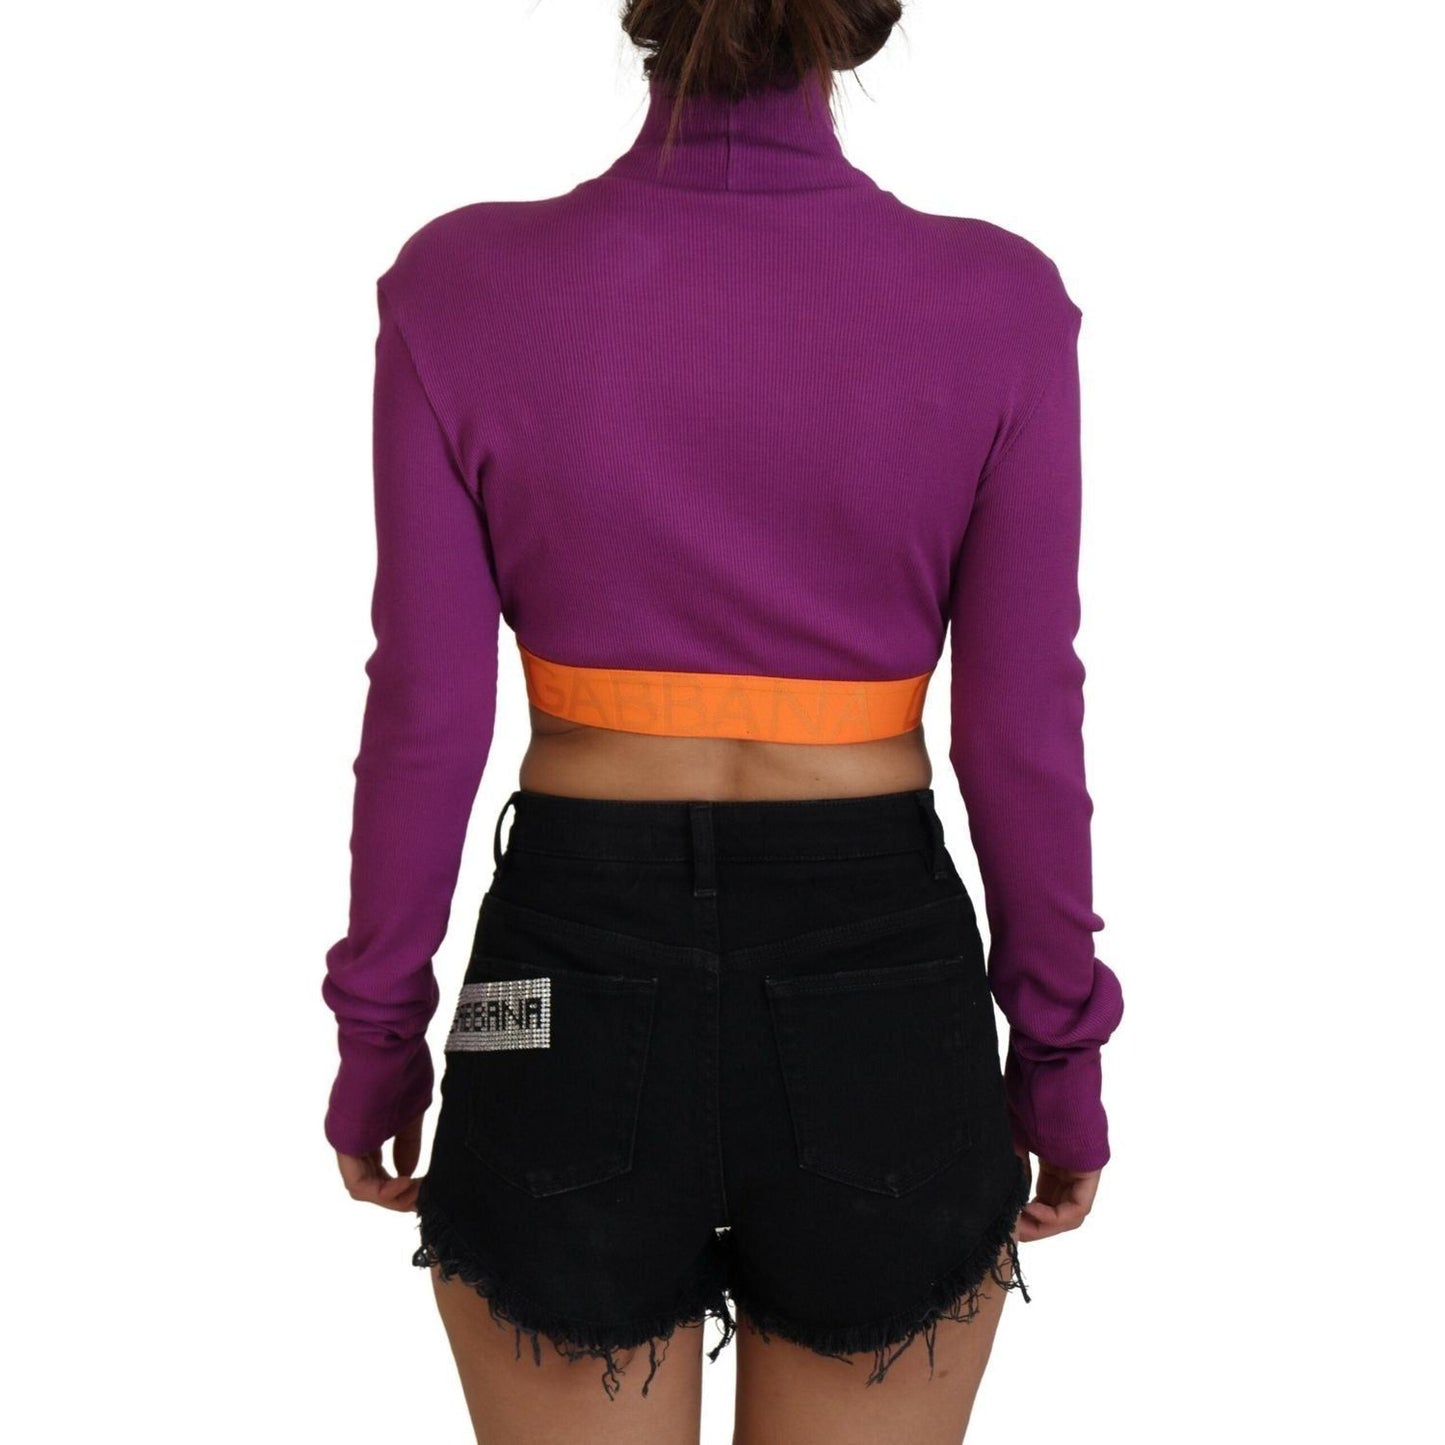 Dolce & Gabbana Elegant Purple Turtle Neck Pullover Sweater purple-turtle-neck-cropped-pullover-sweater IMG_2706-scaled-0b6e6285-9e9.jpg